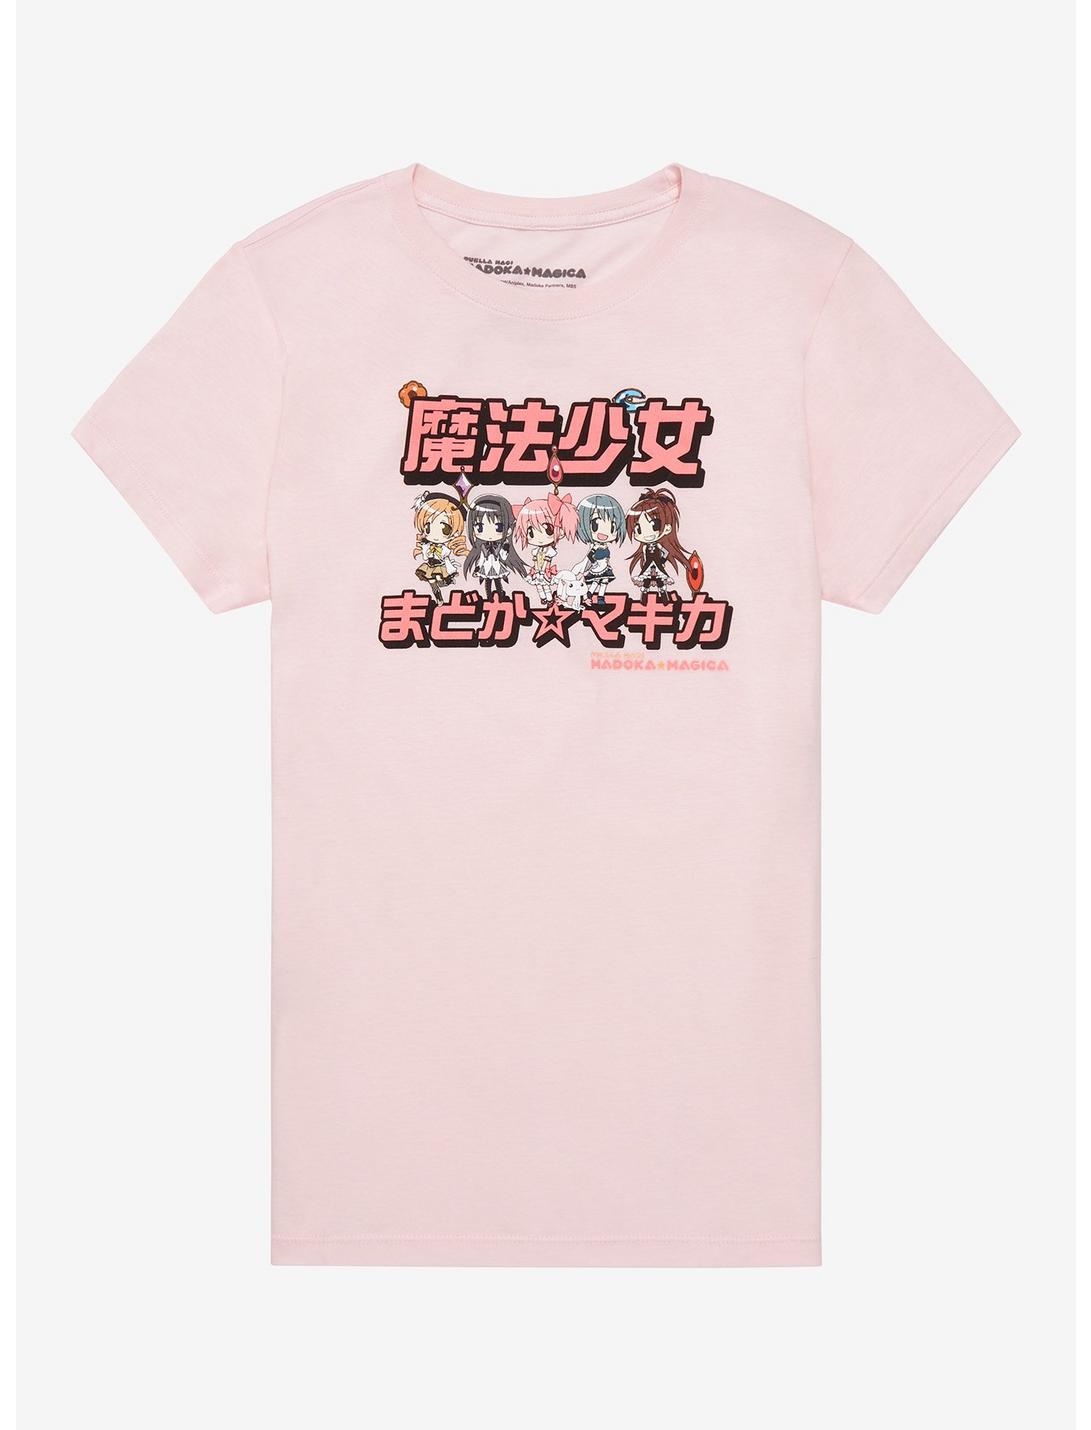 Puella Magi Madoka Magika Chibi Characters Girls T-Shirt, MULTI, hi-res